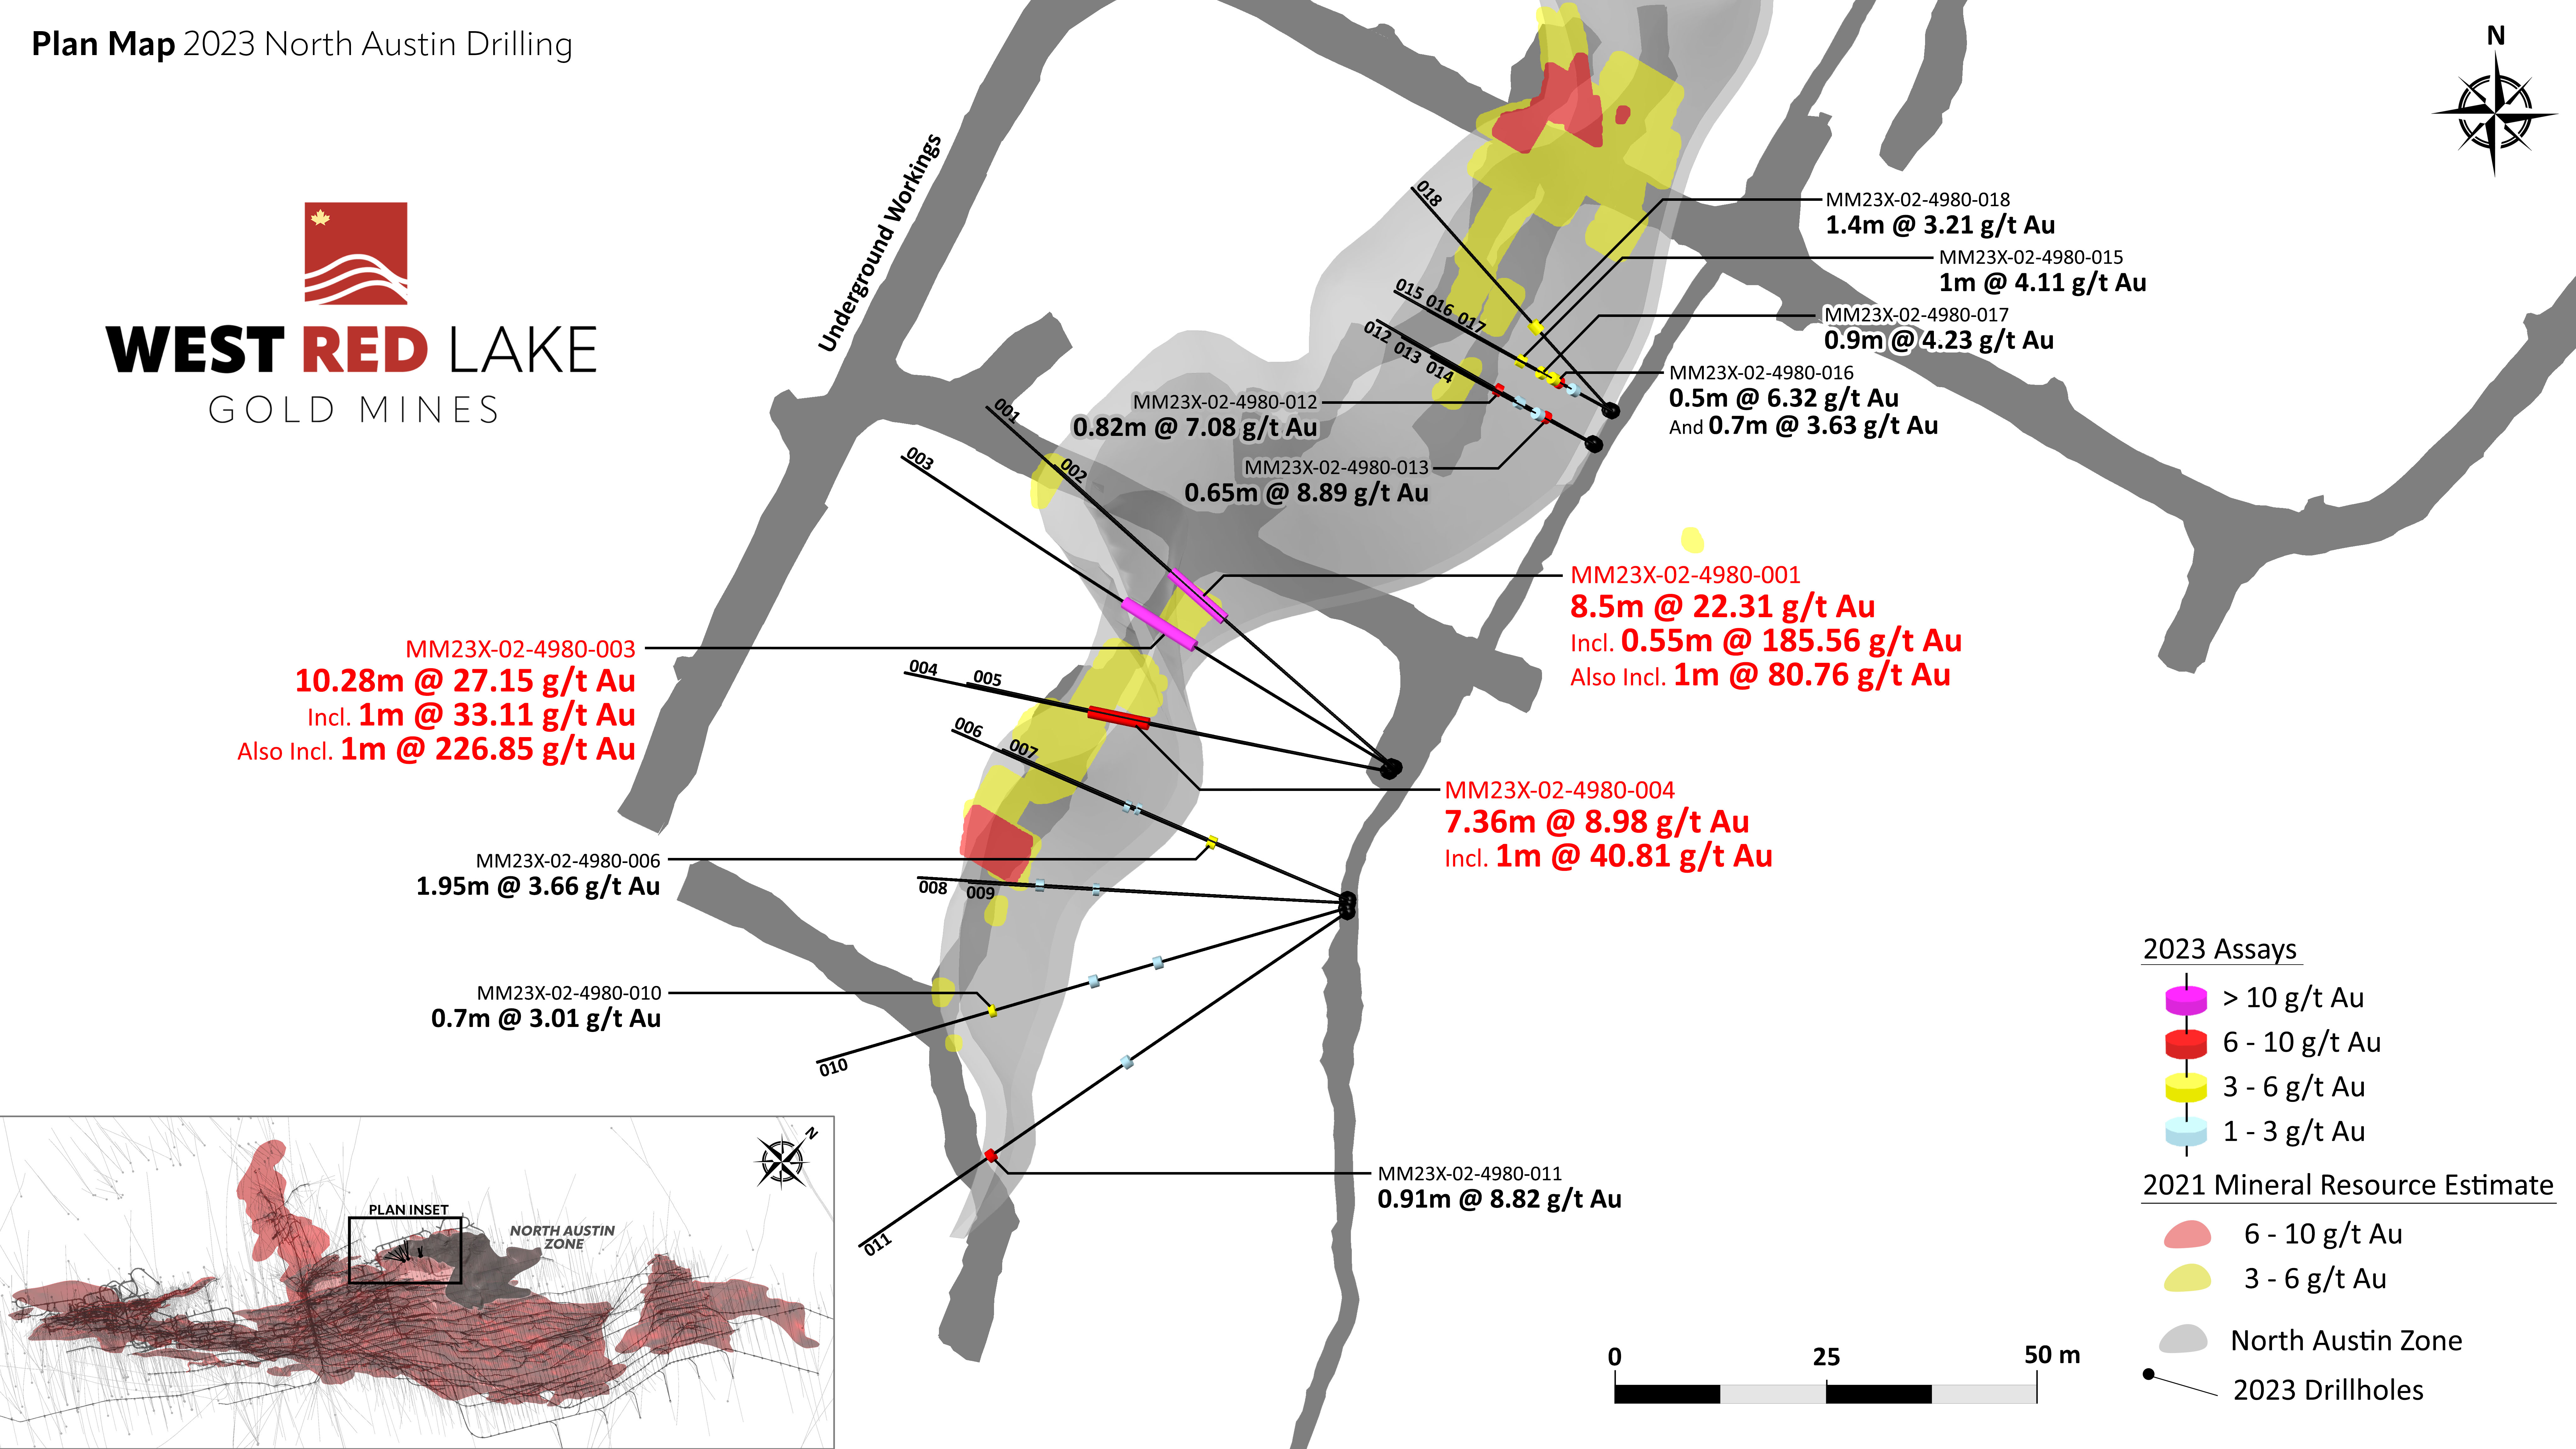 Plan Map 2023 North Austin Drilling